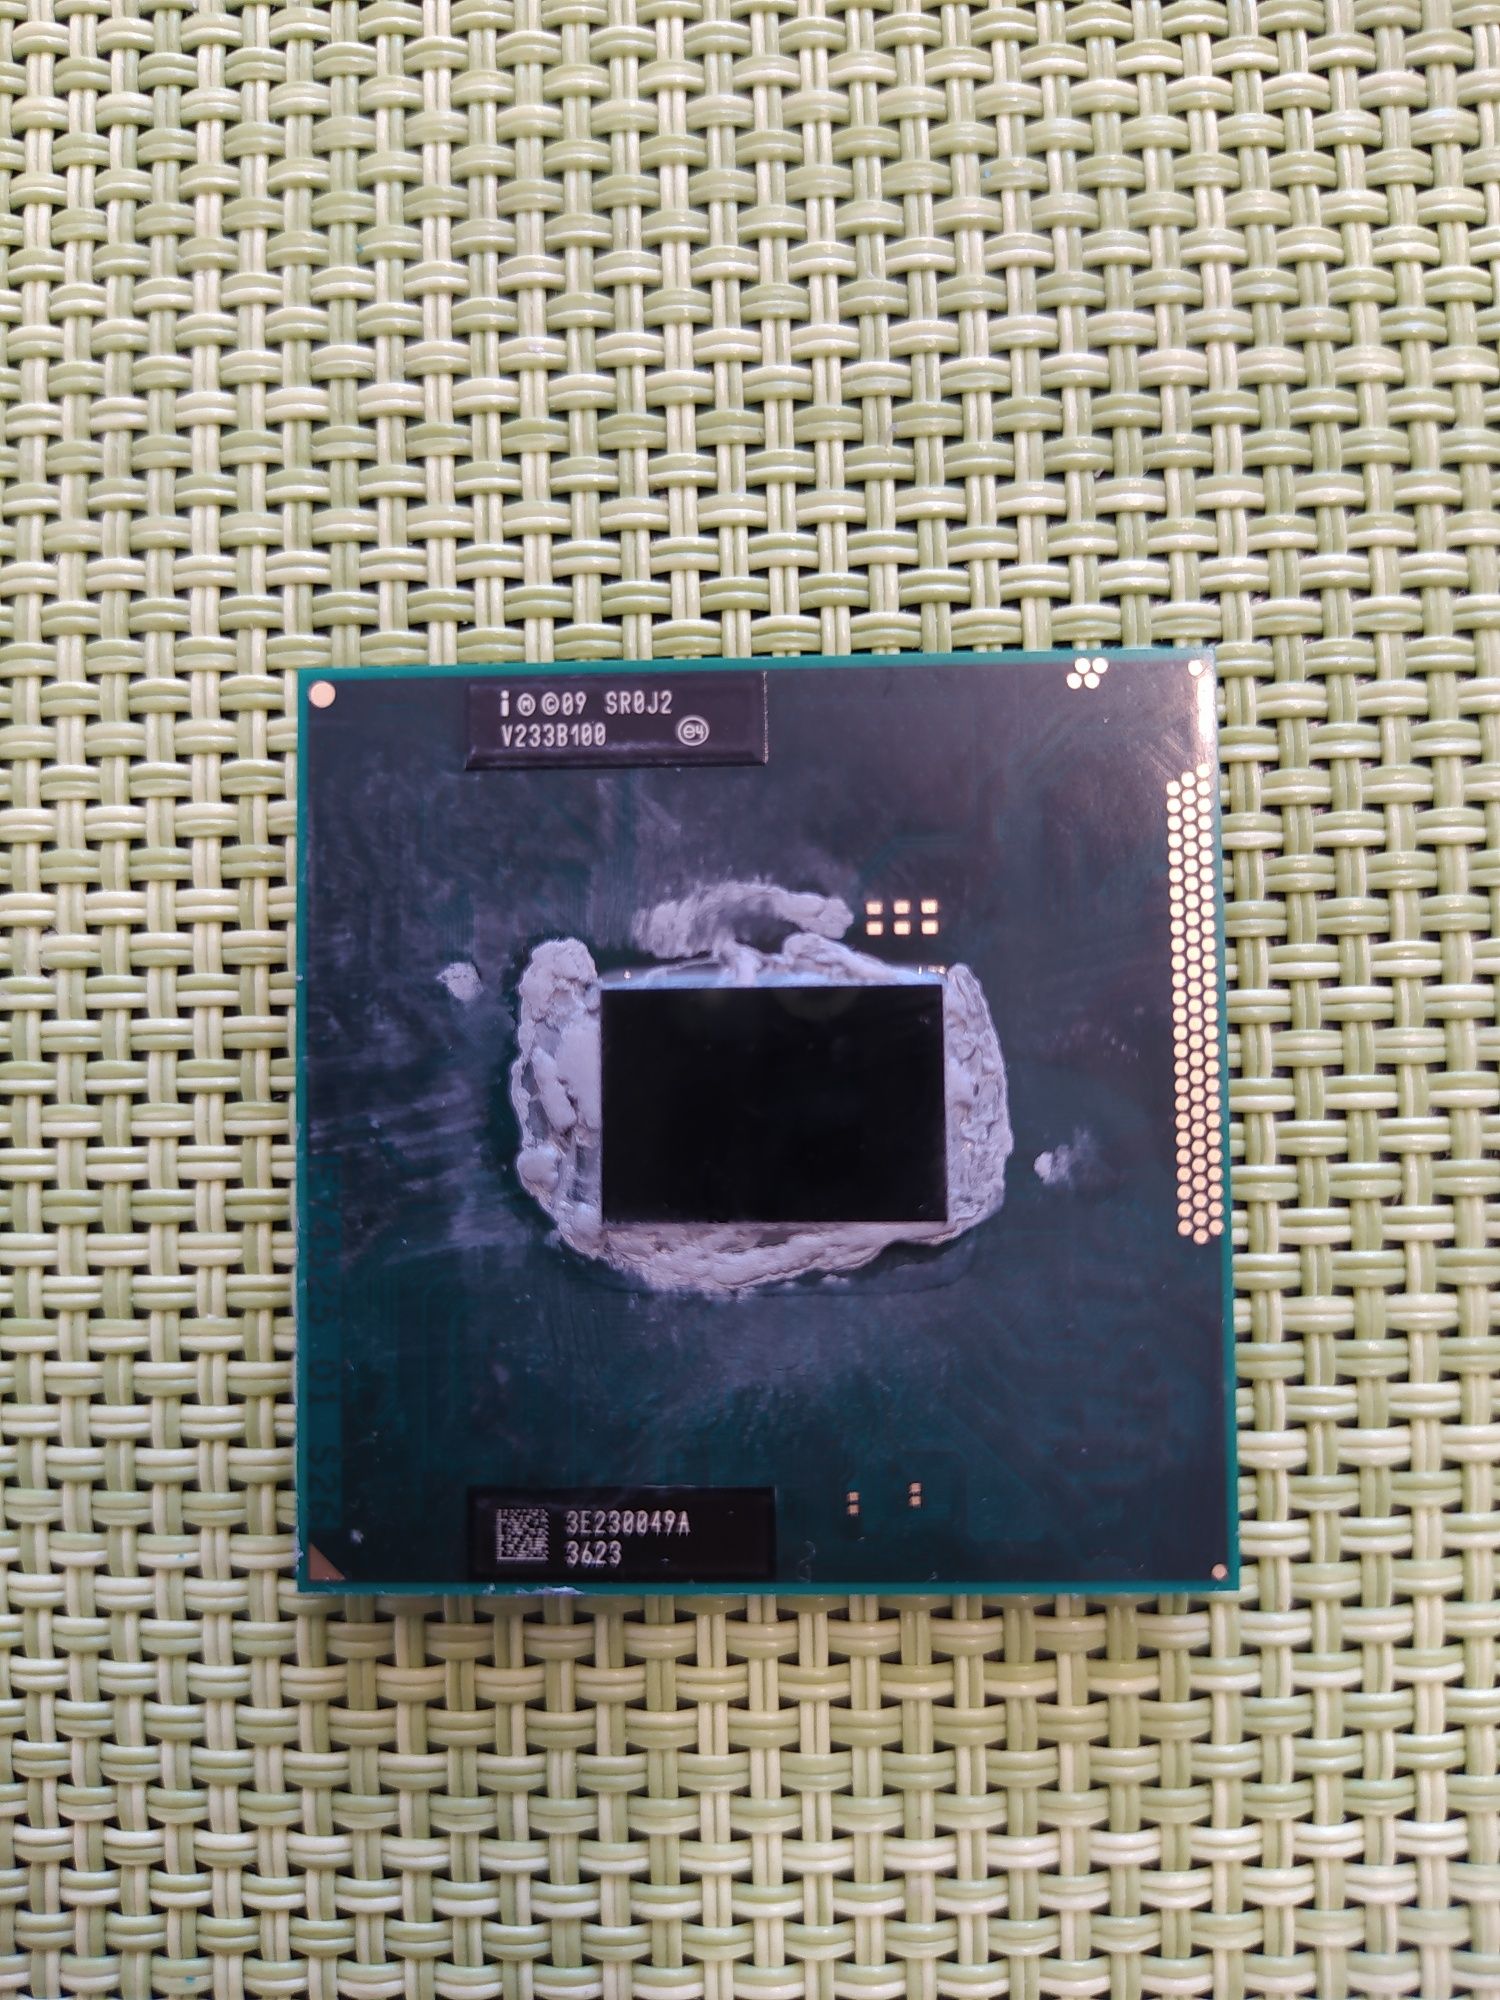 Procesor Intel core i3 z laptopa Samsung